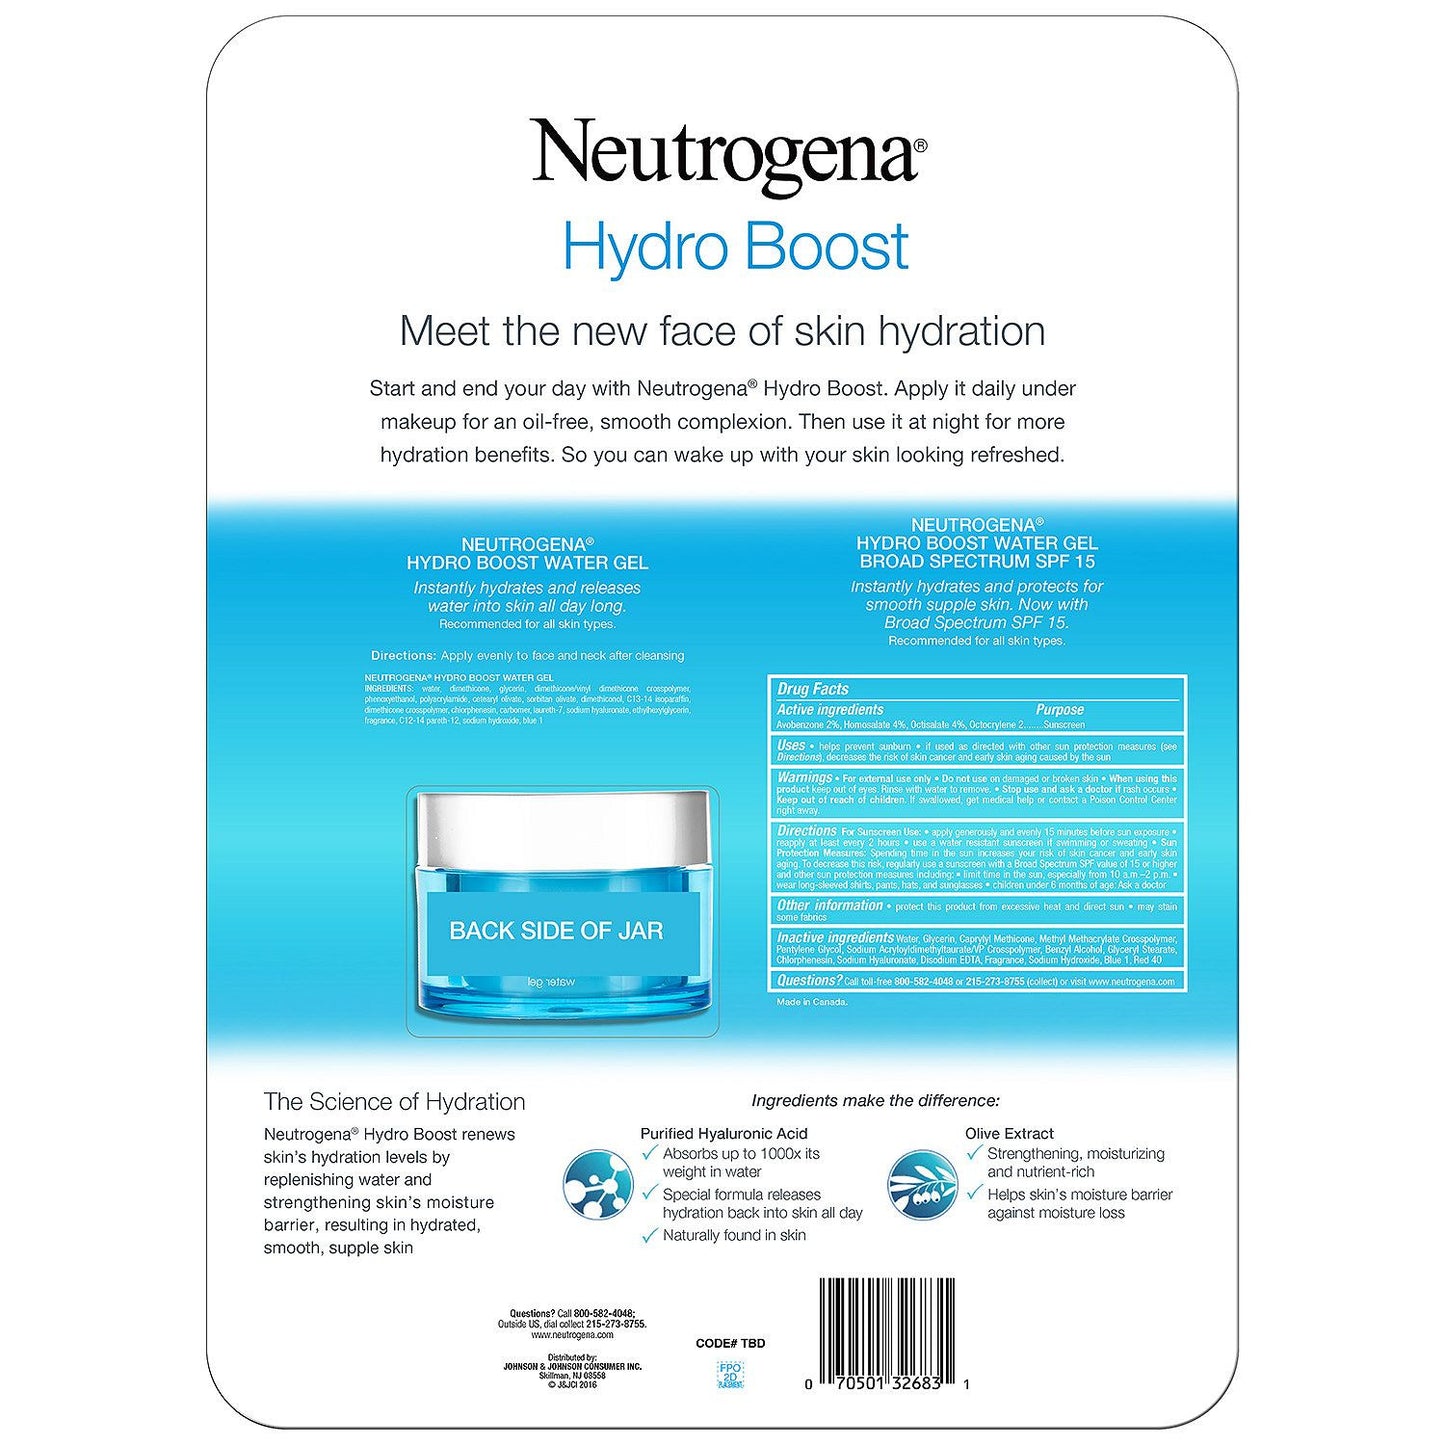 Neutrogena Hydro Boost Water Gel & Broad Spectrum Sunscreen SPF 15 (1.7 oz. + 1.7 fl. oz.)